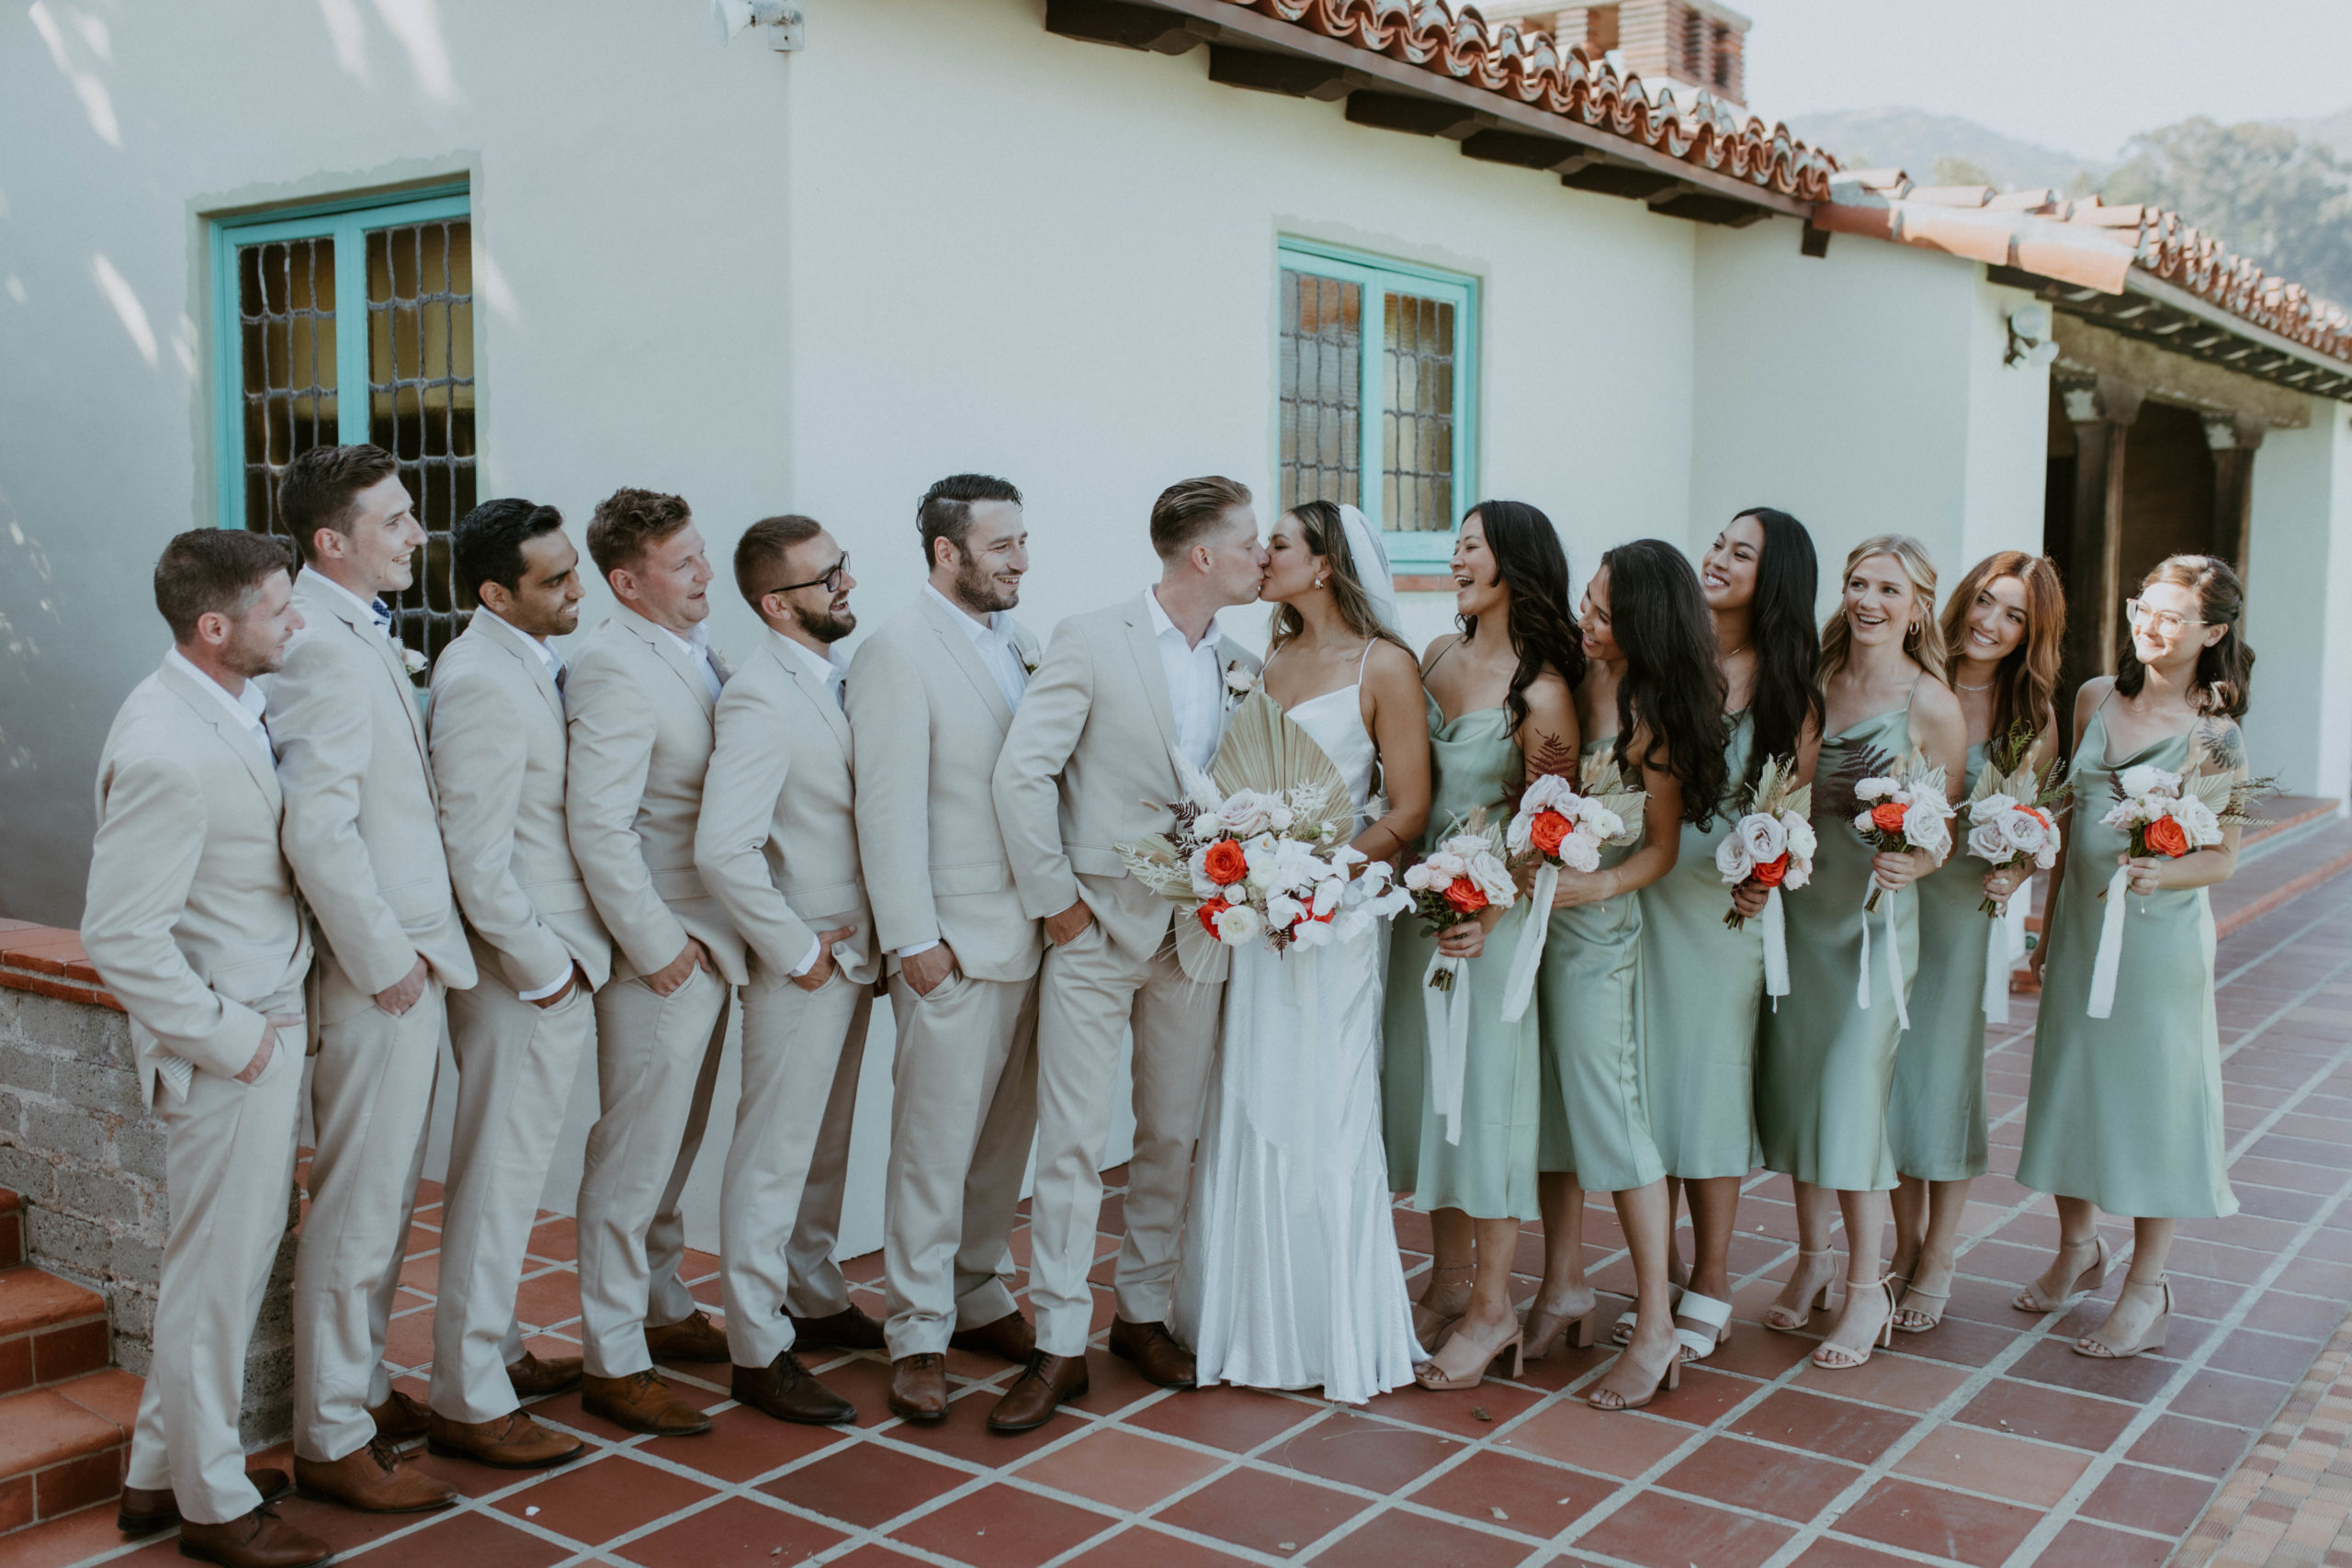 group shot of the bride, groom, groomsmen and bridesmaids